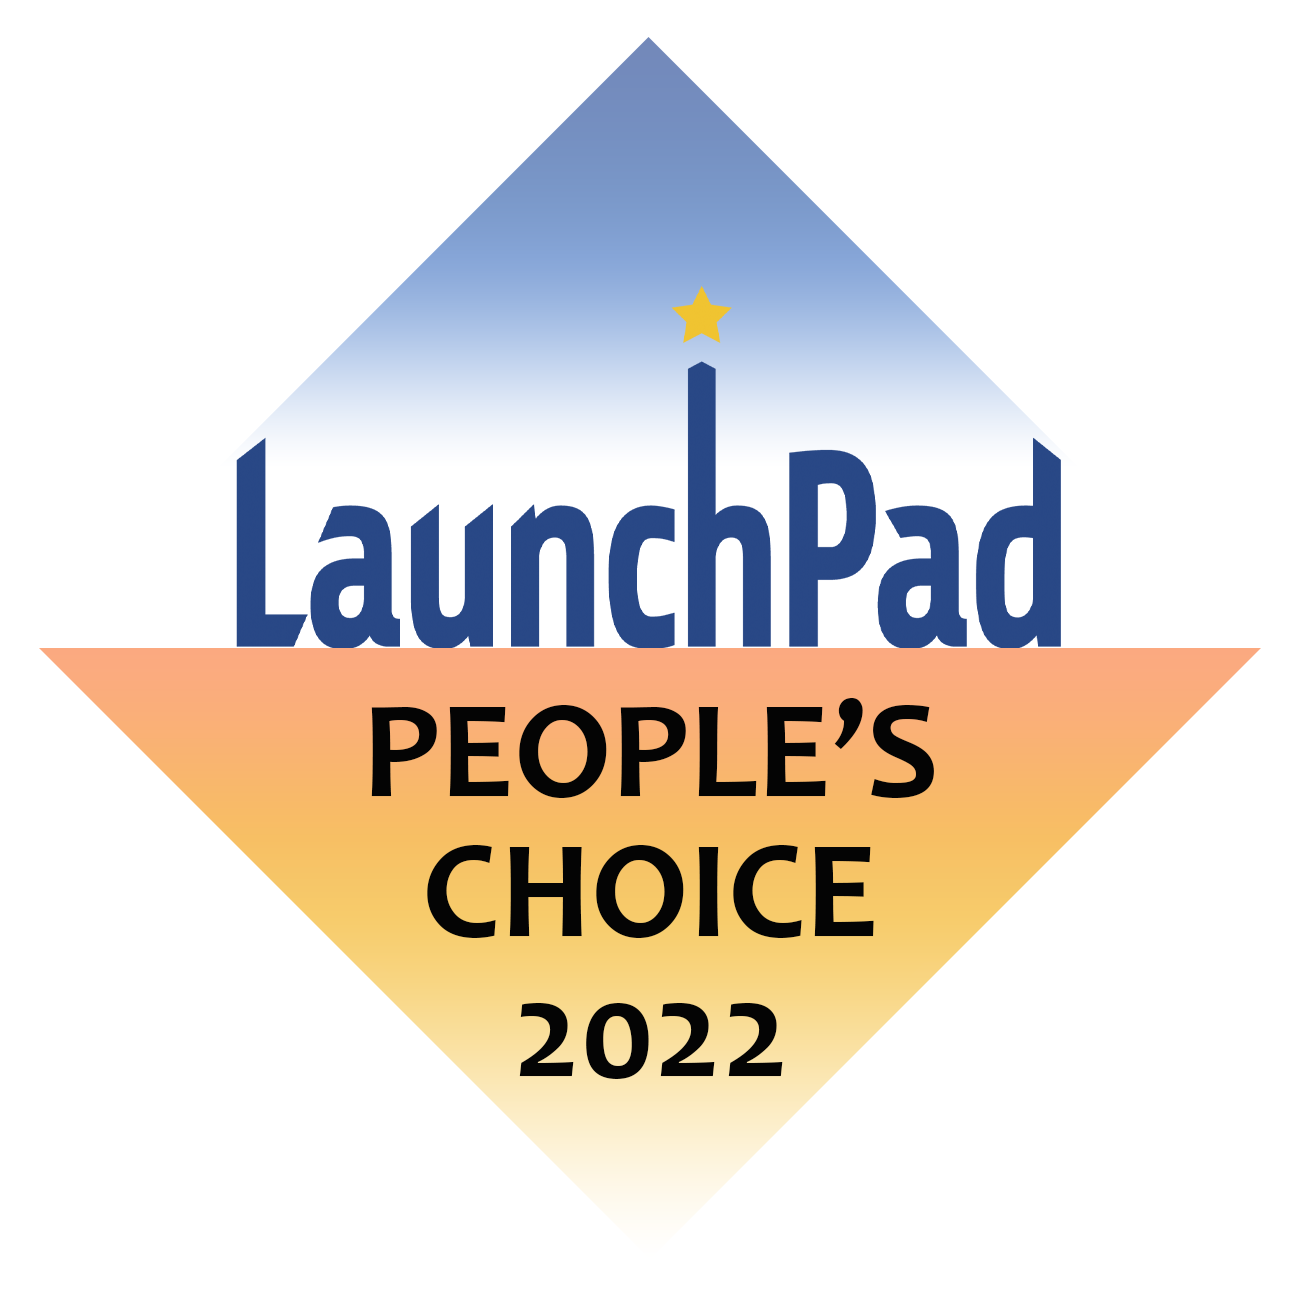 2022 launchpad finalist